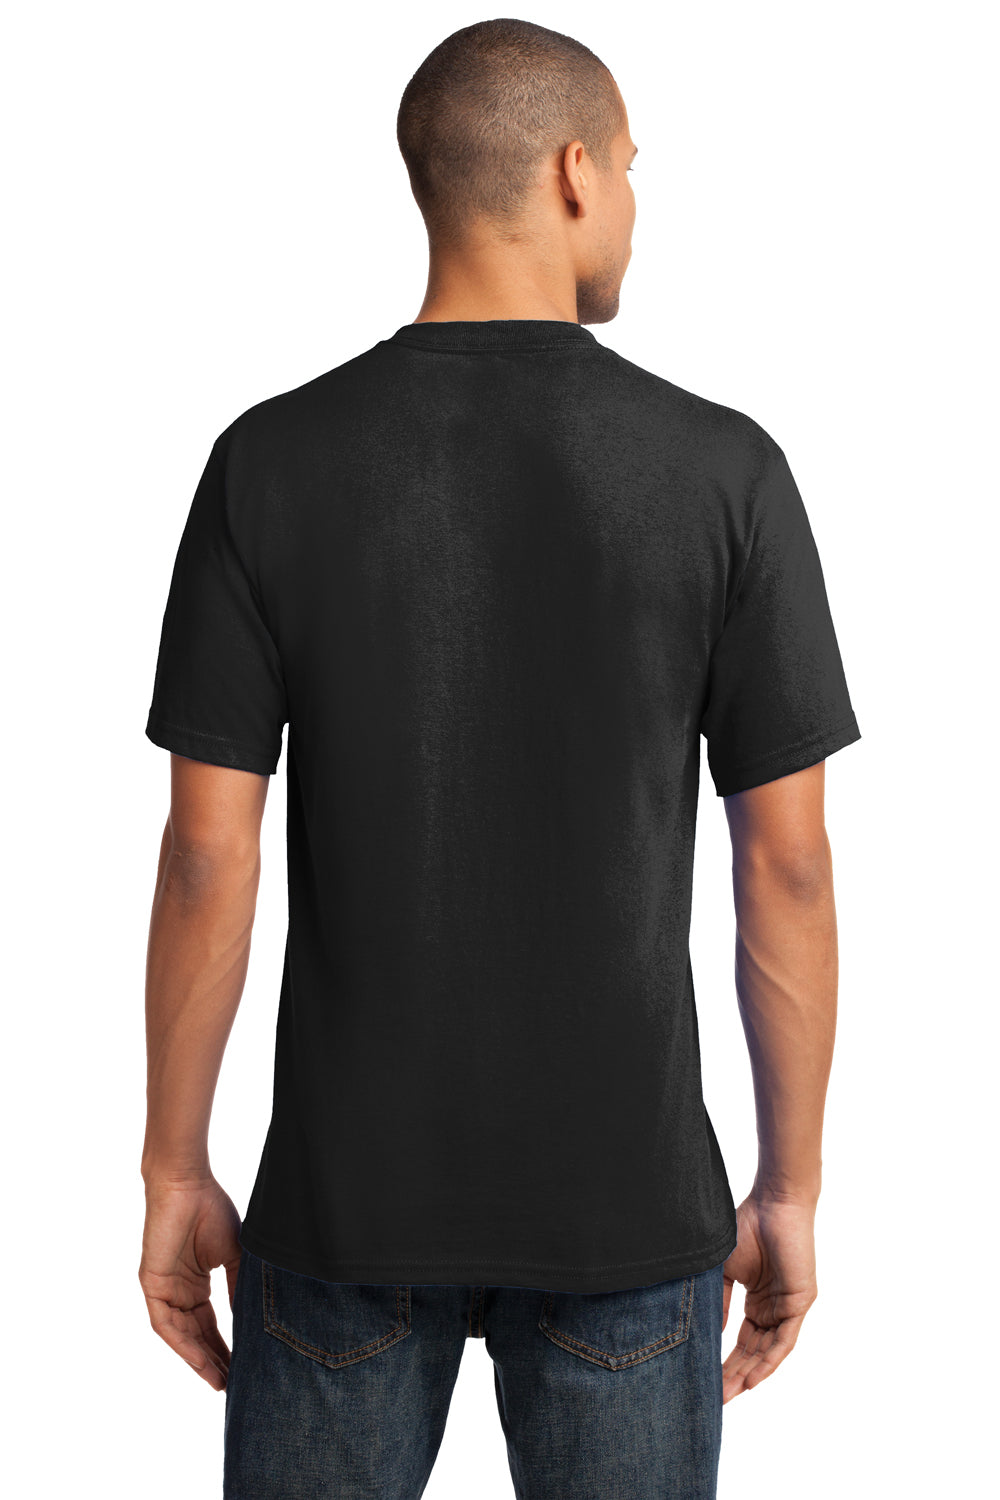 Port & Company PC54V Mens Core Short Sleeve V-Neck T-Shirt Black Back